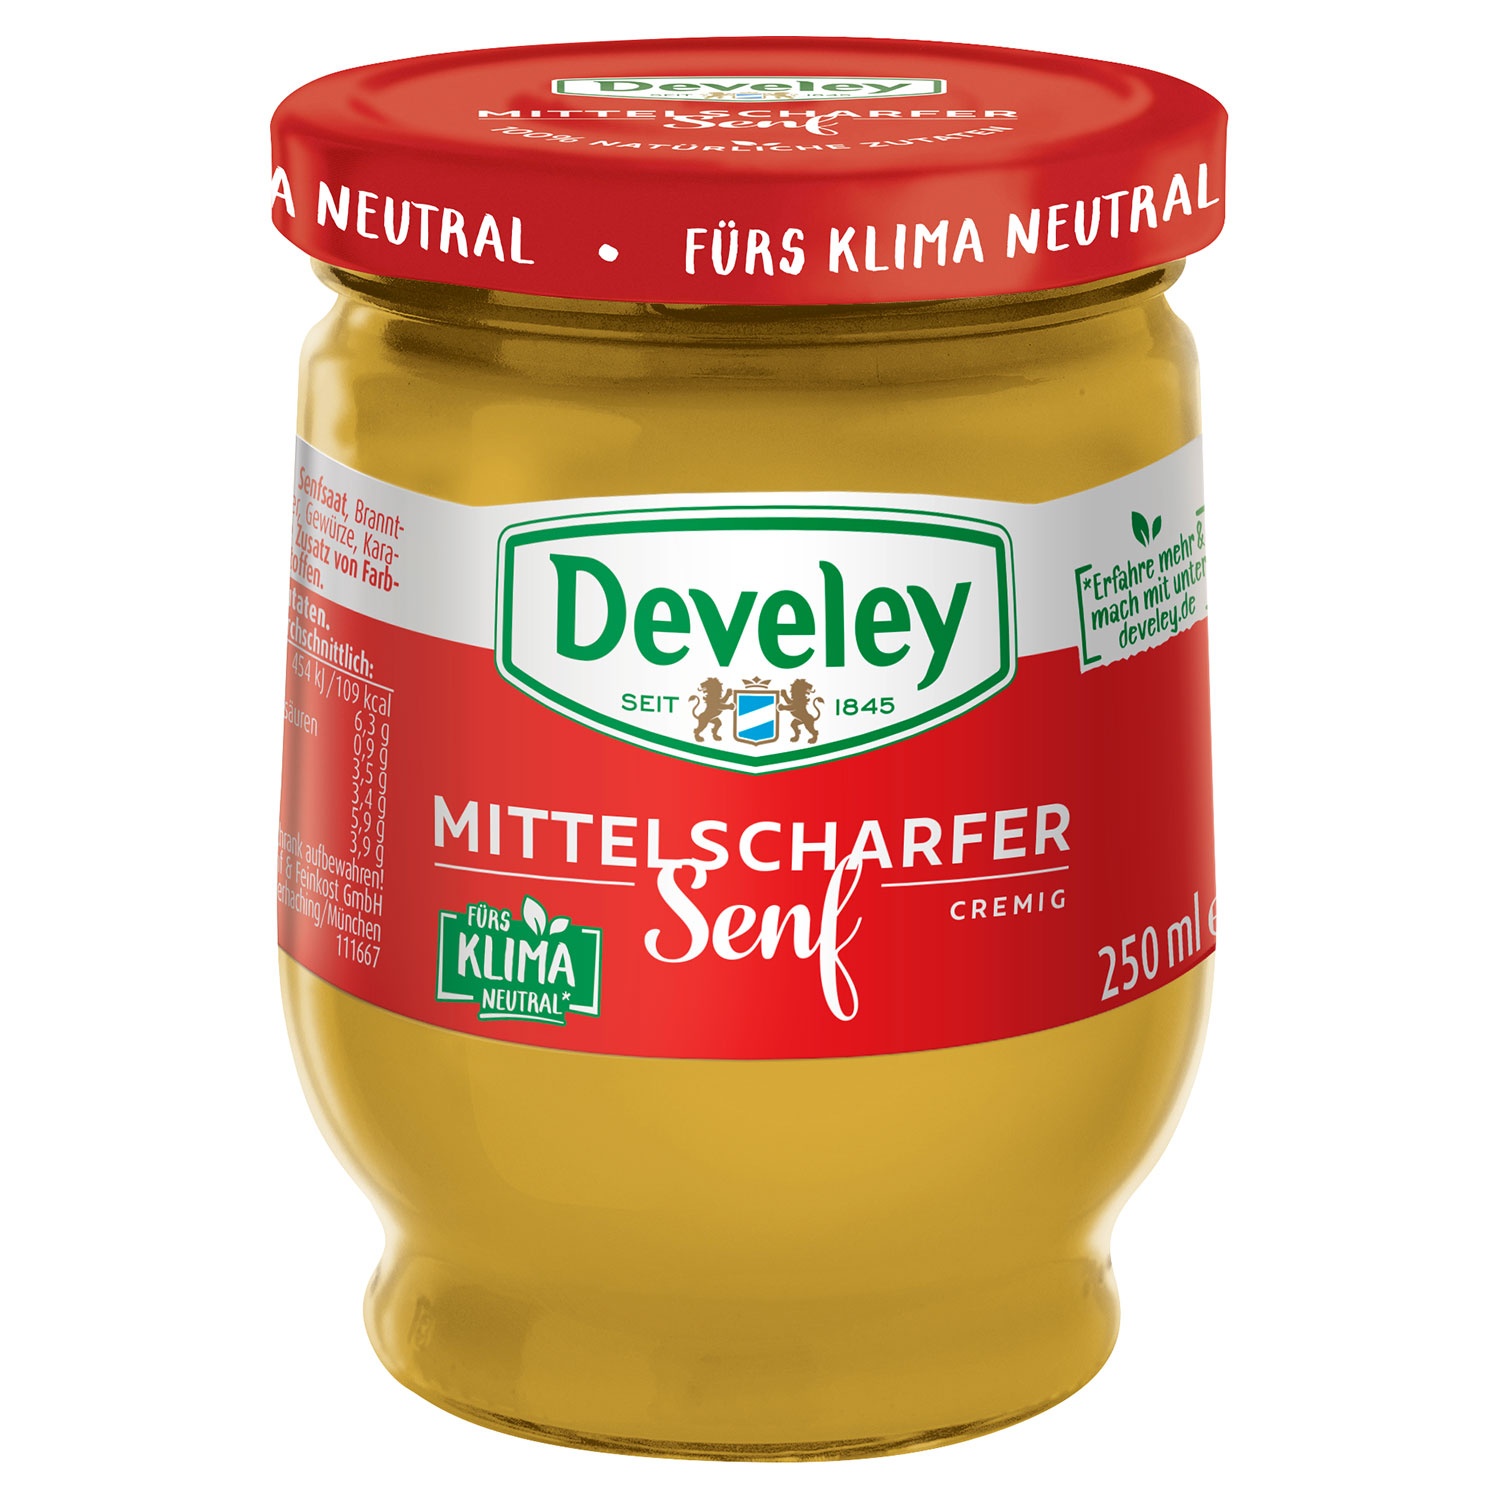 DEVELEY Mittelscharfer Senf 250 ml